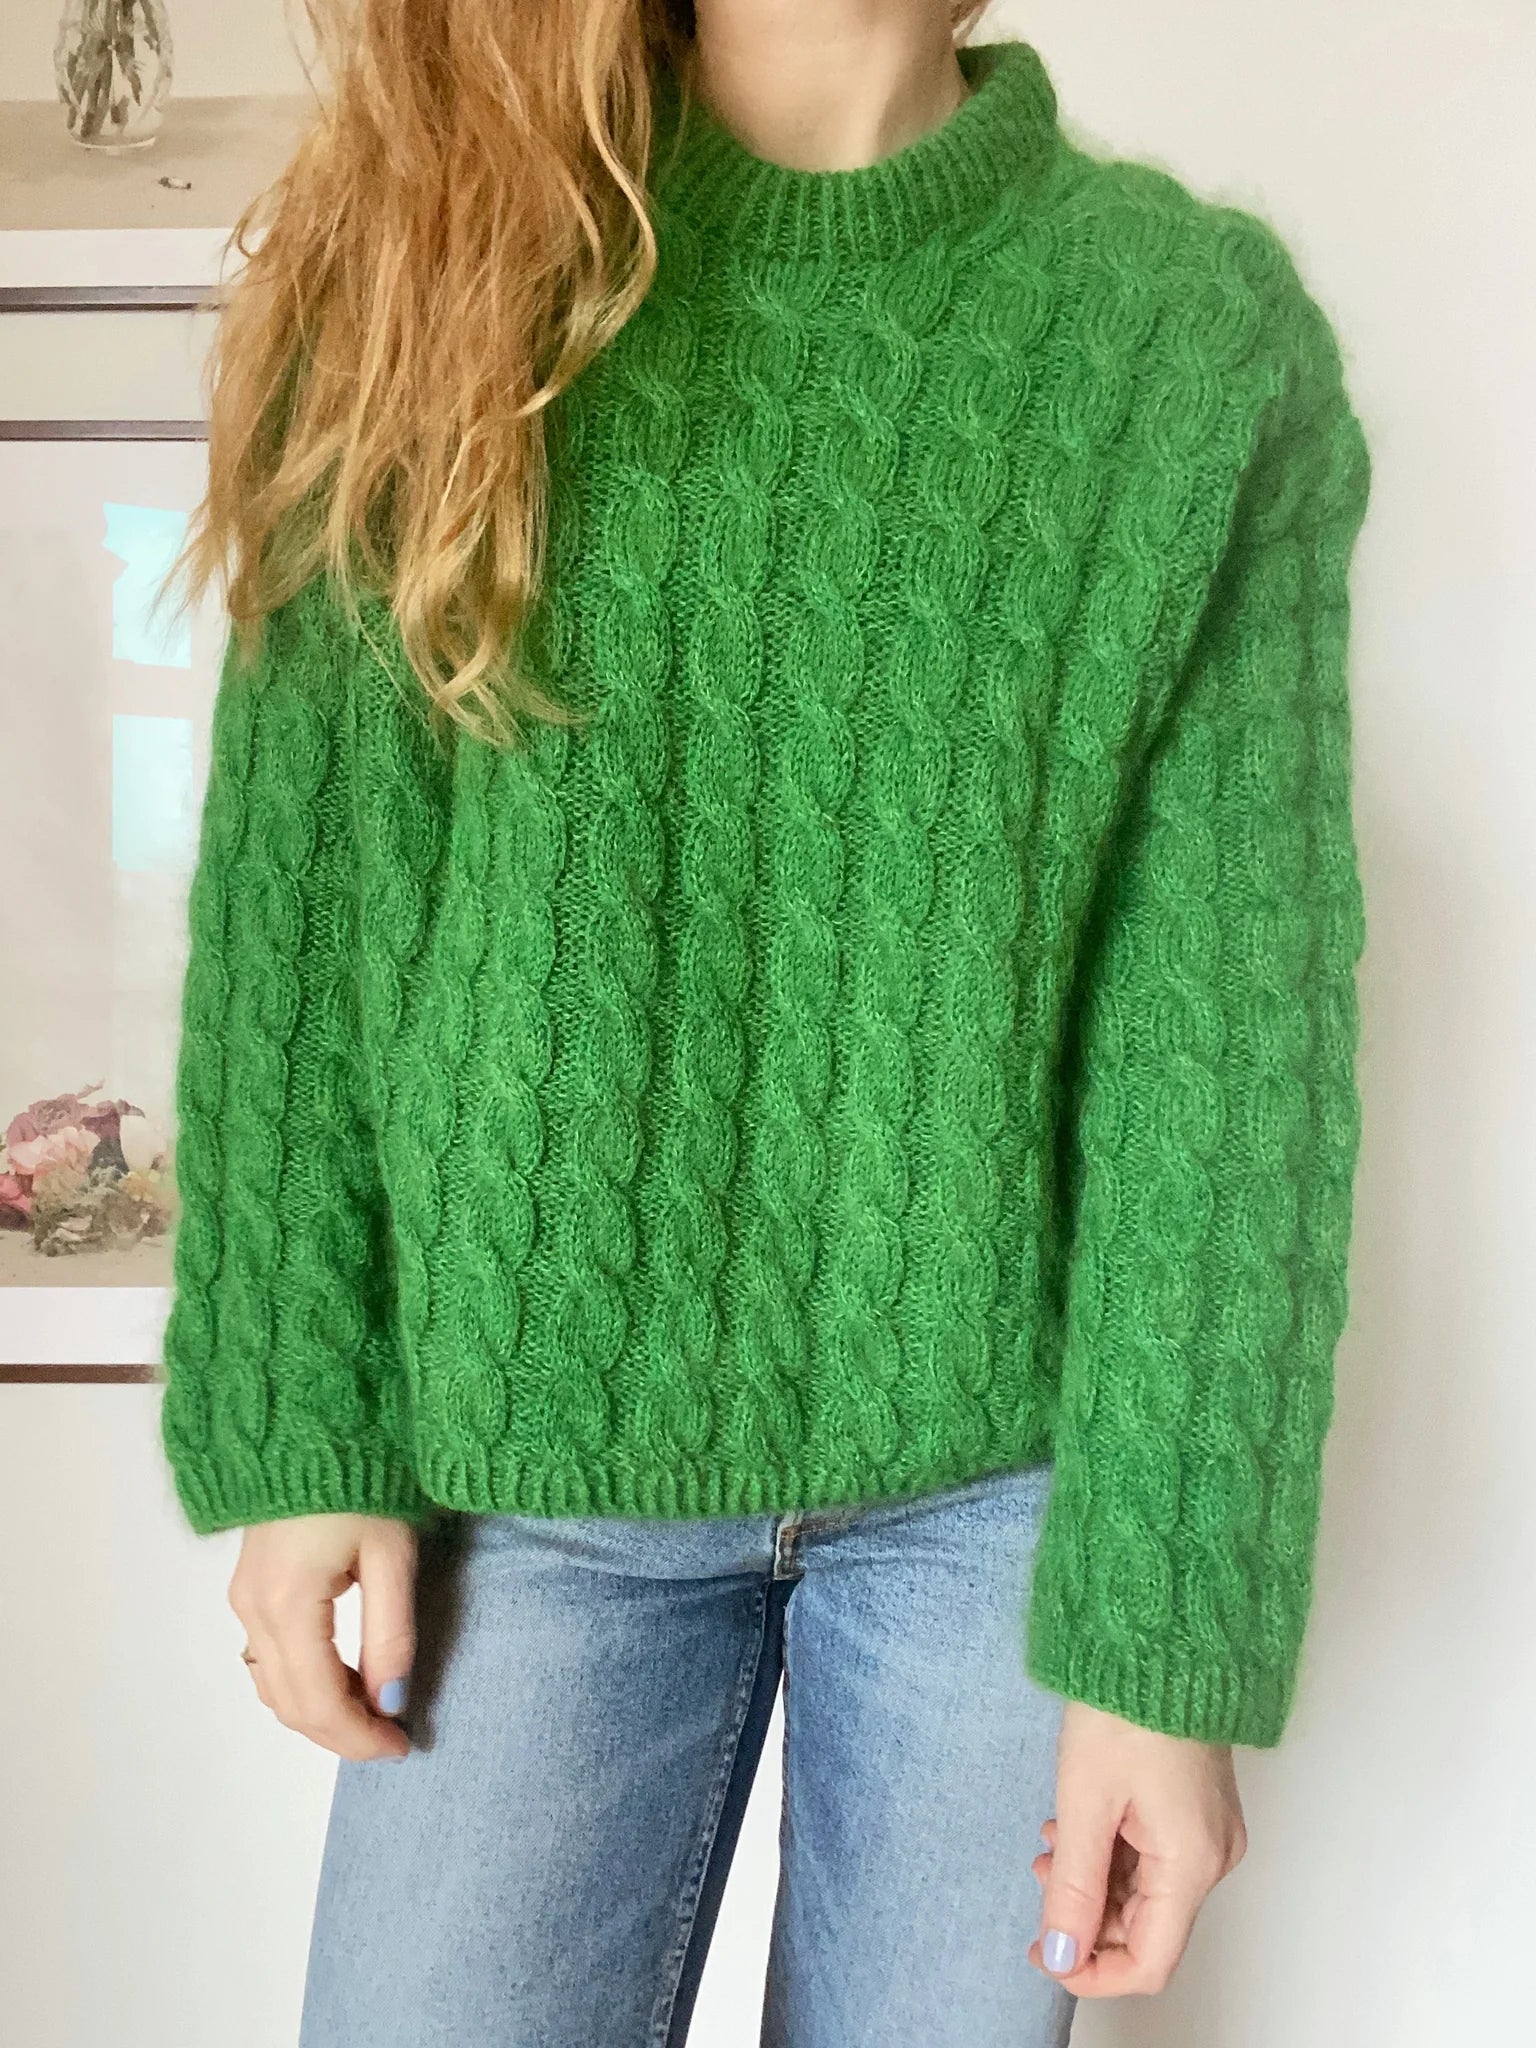 Sweater No. 15 - My Favourite Things Knitwear - Strikkekit